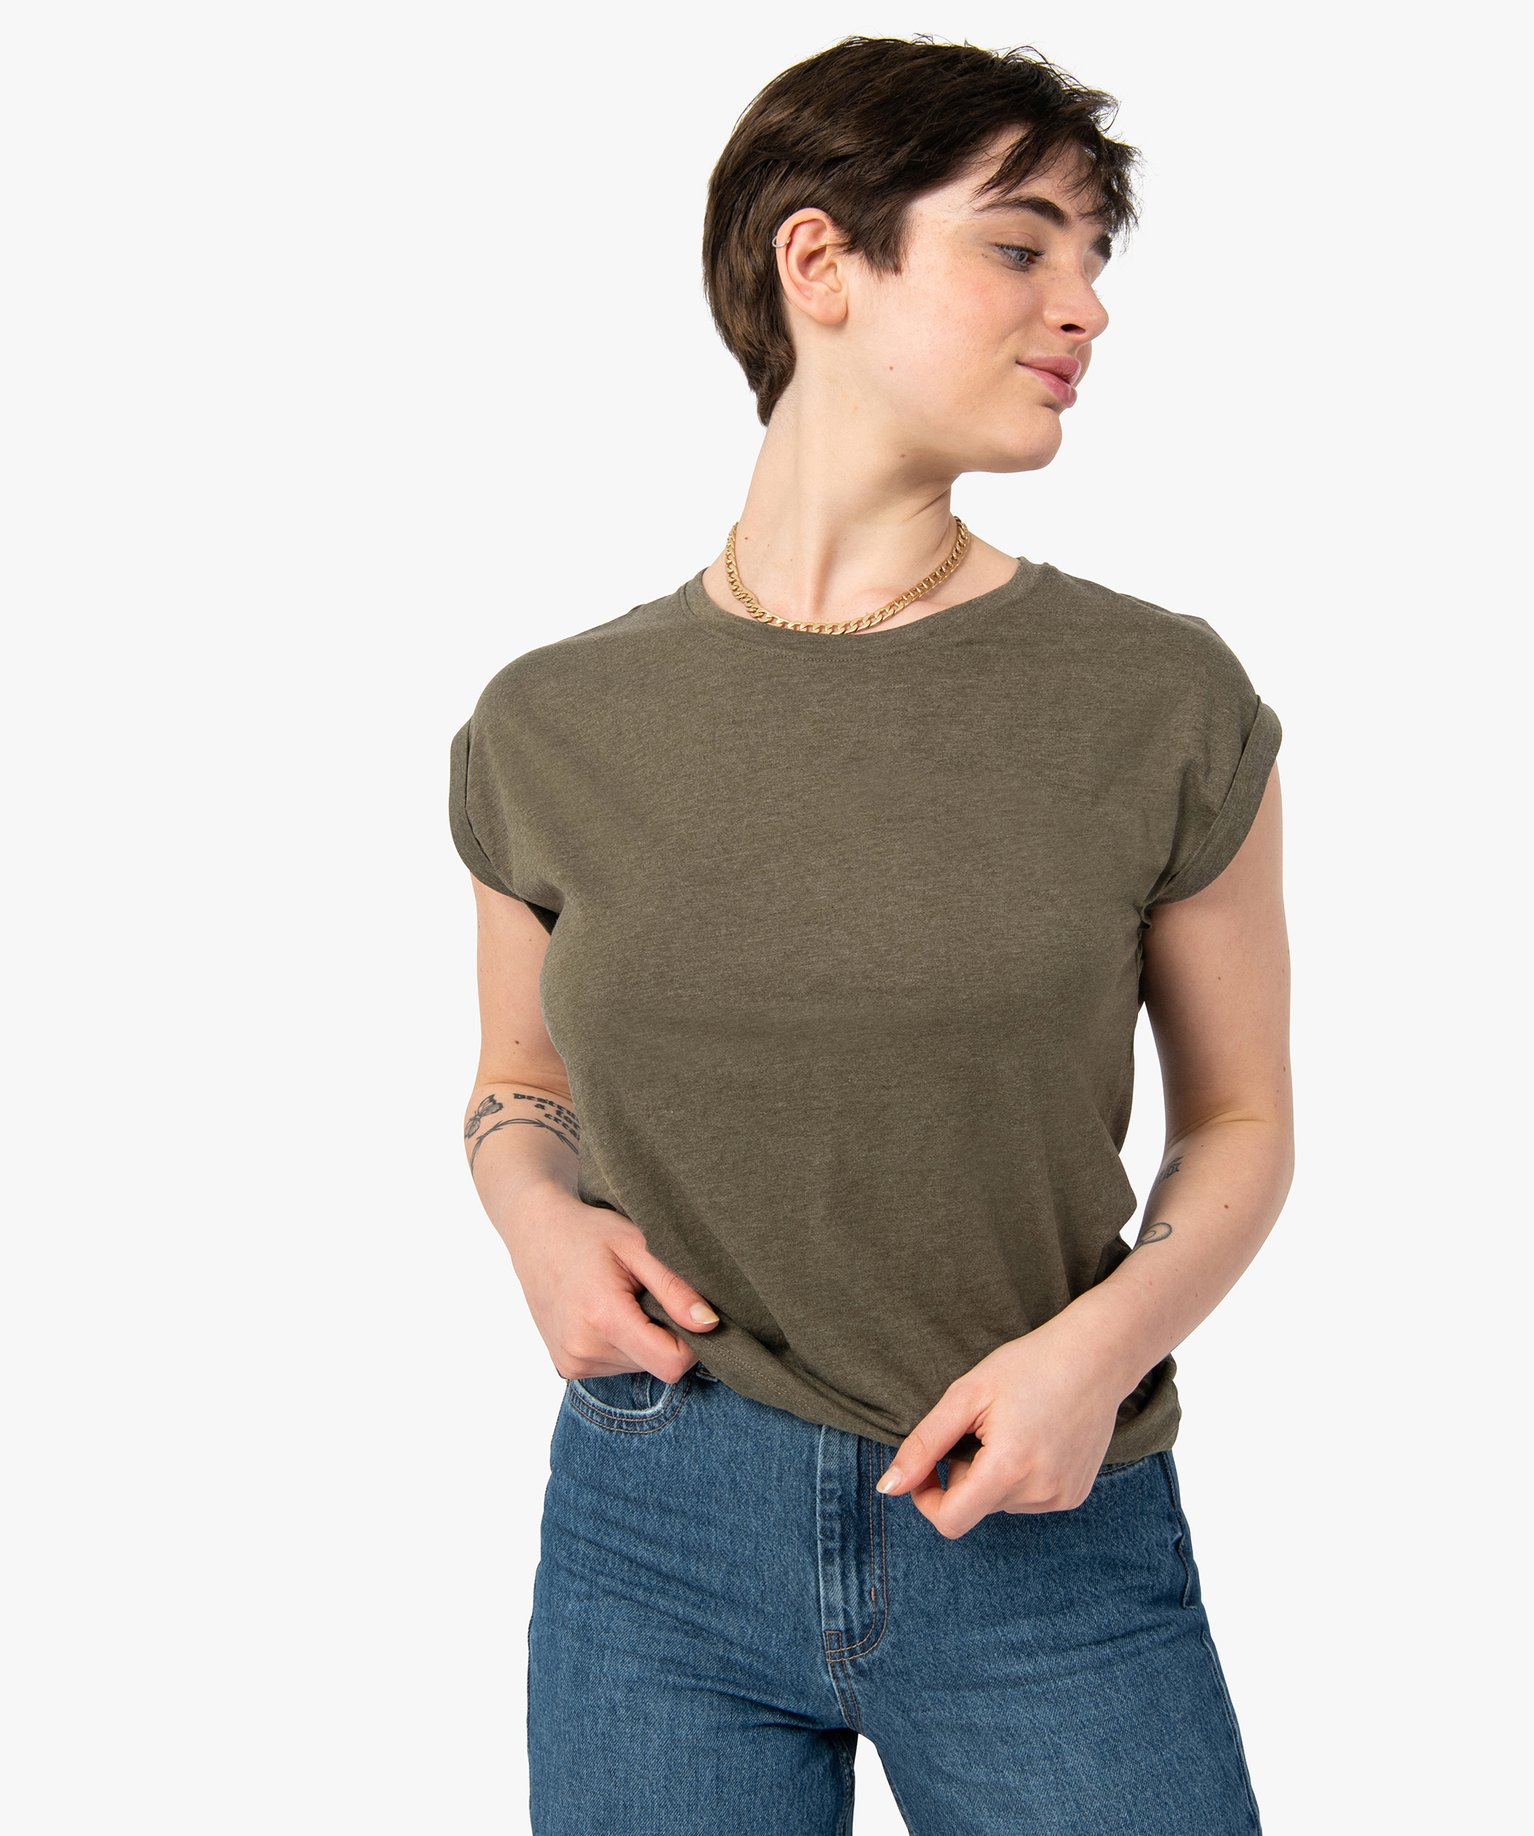 tee-shirt femme a manches courtes a revers vert t-shirts manches courtes